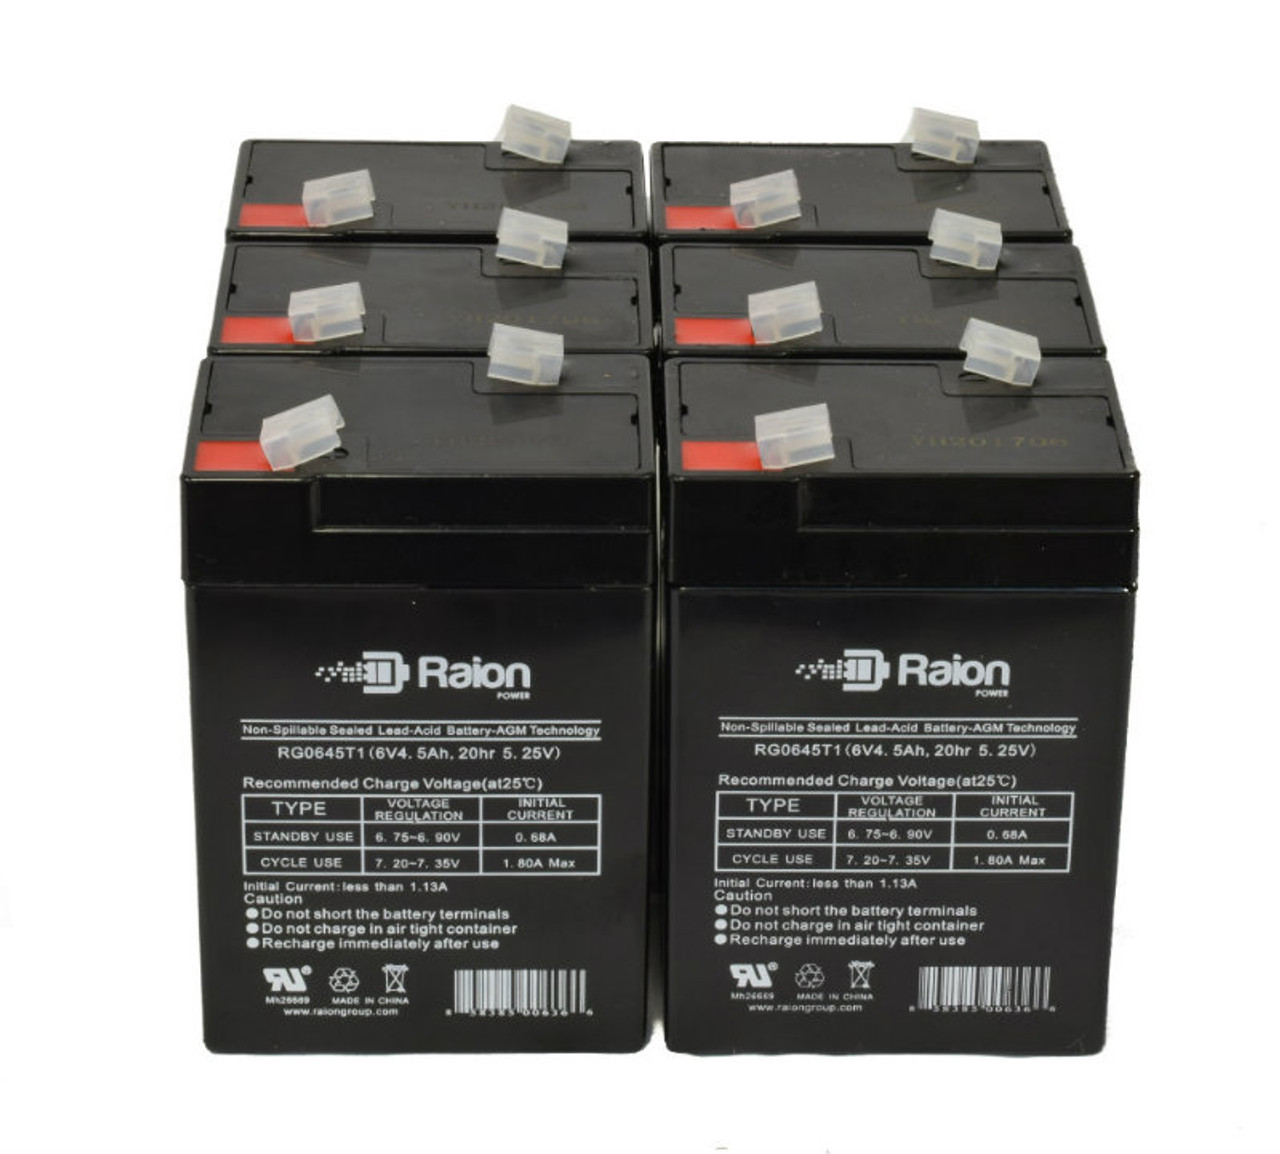 Raion Power 6 Volt 4.5Ah RG0645T1 Replacement Battery for B&B BP5-6 - 6 Pack